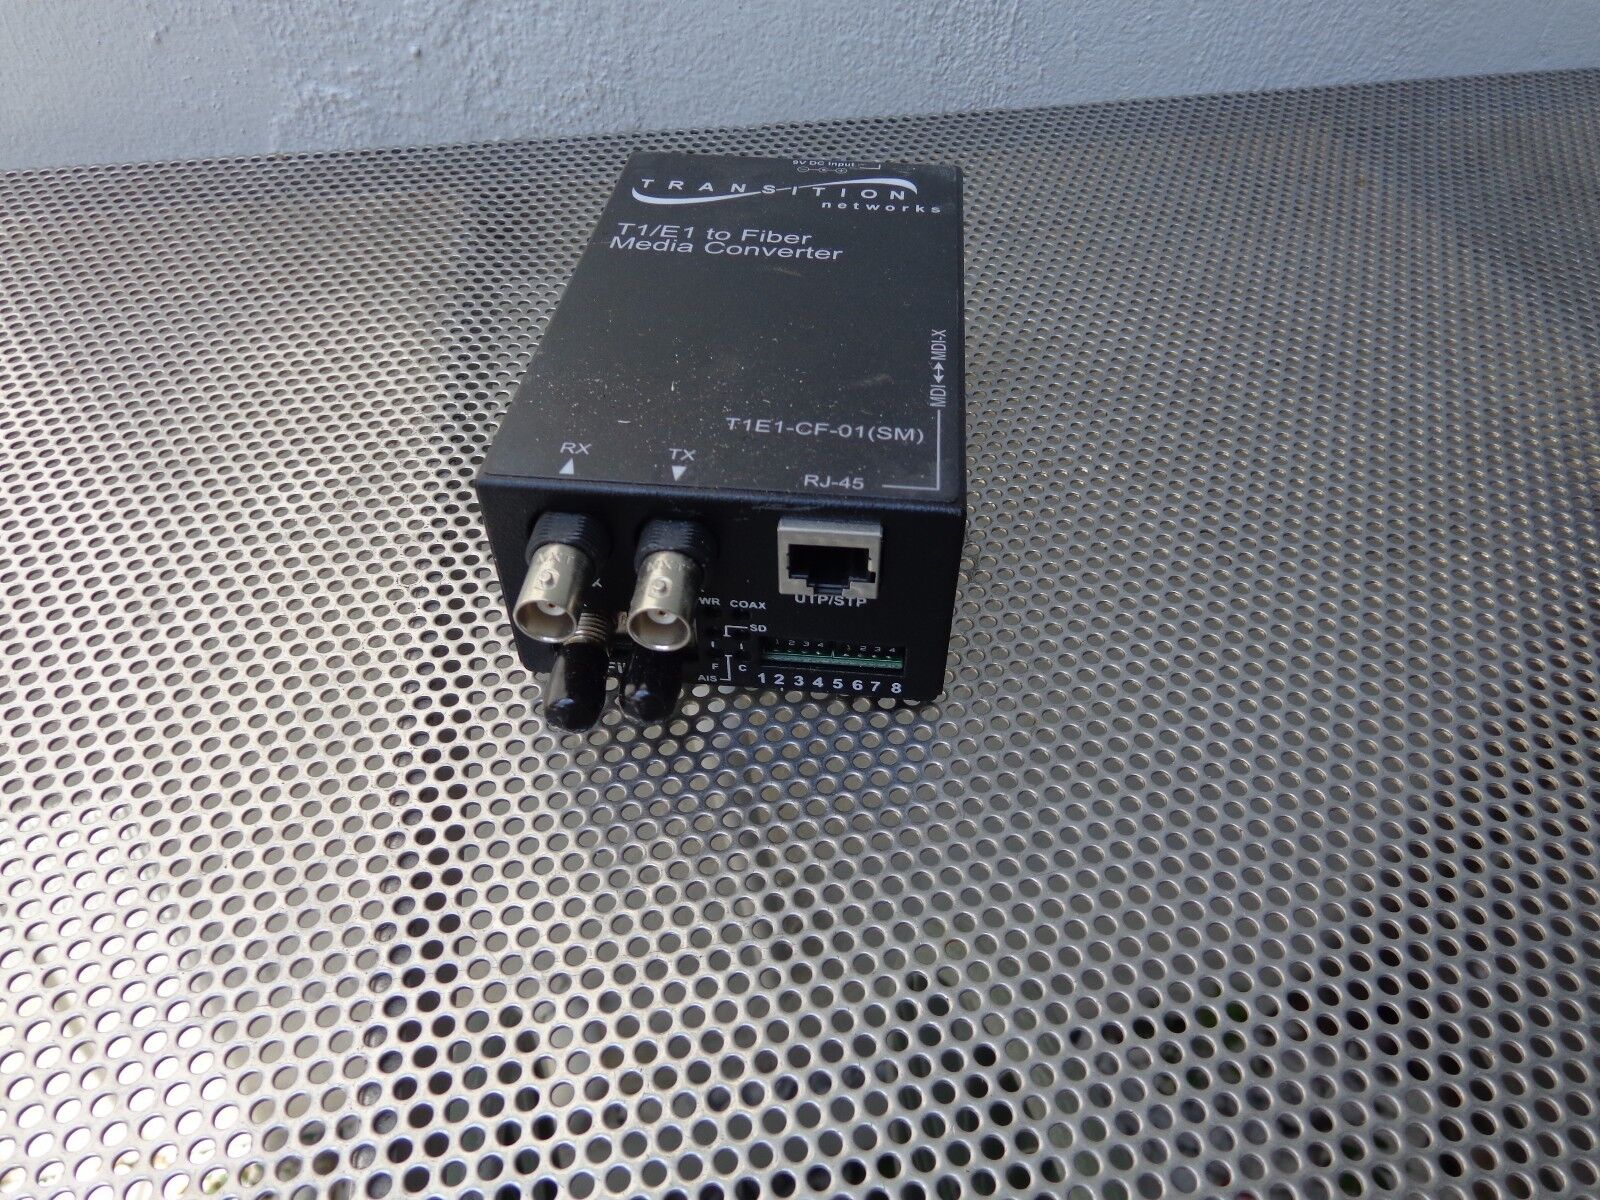 Transition Networks T1E1-CF-01(SM) T1/E1 to Fiber Media Converter (NO ADAPTER)